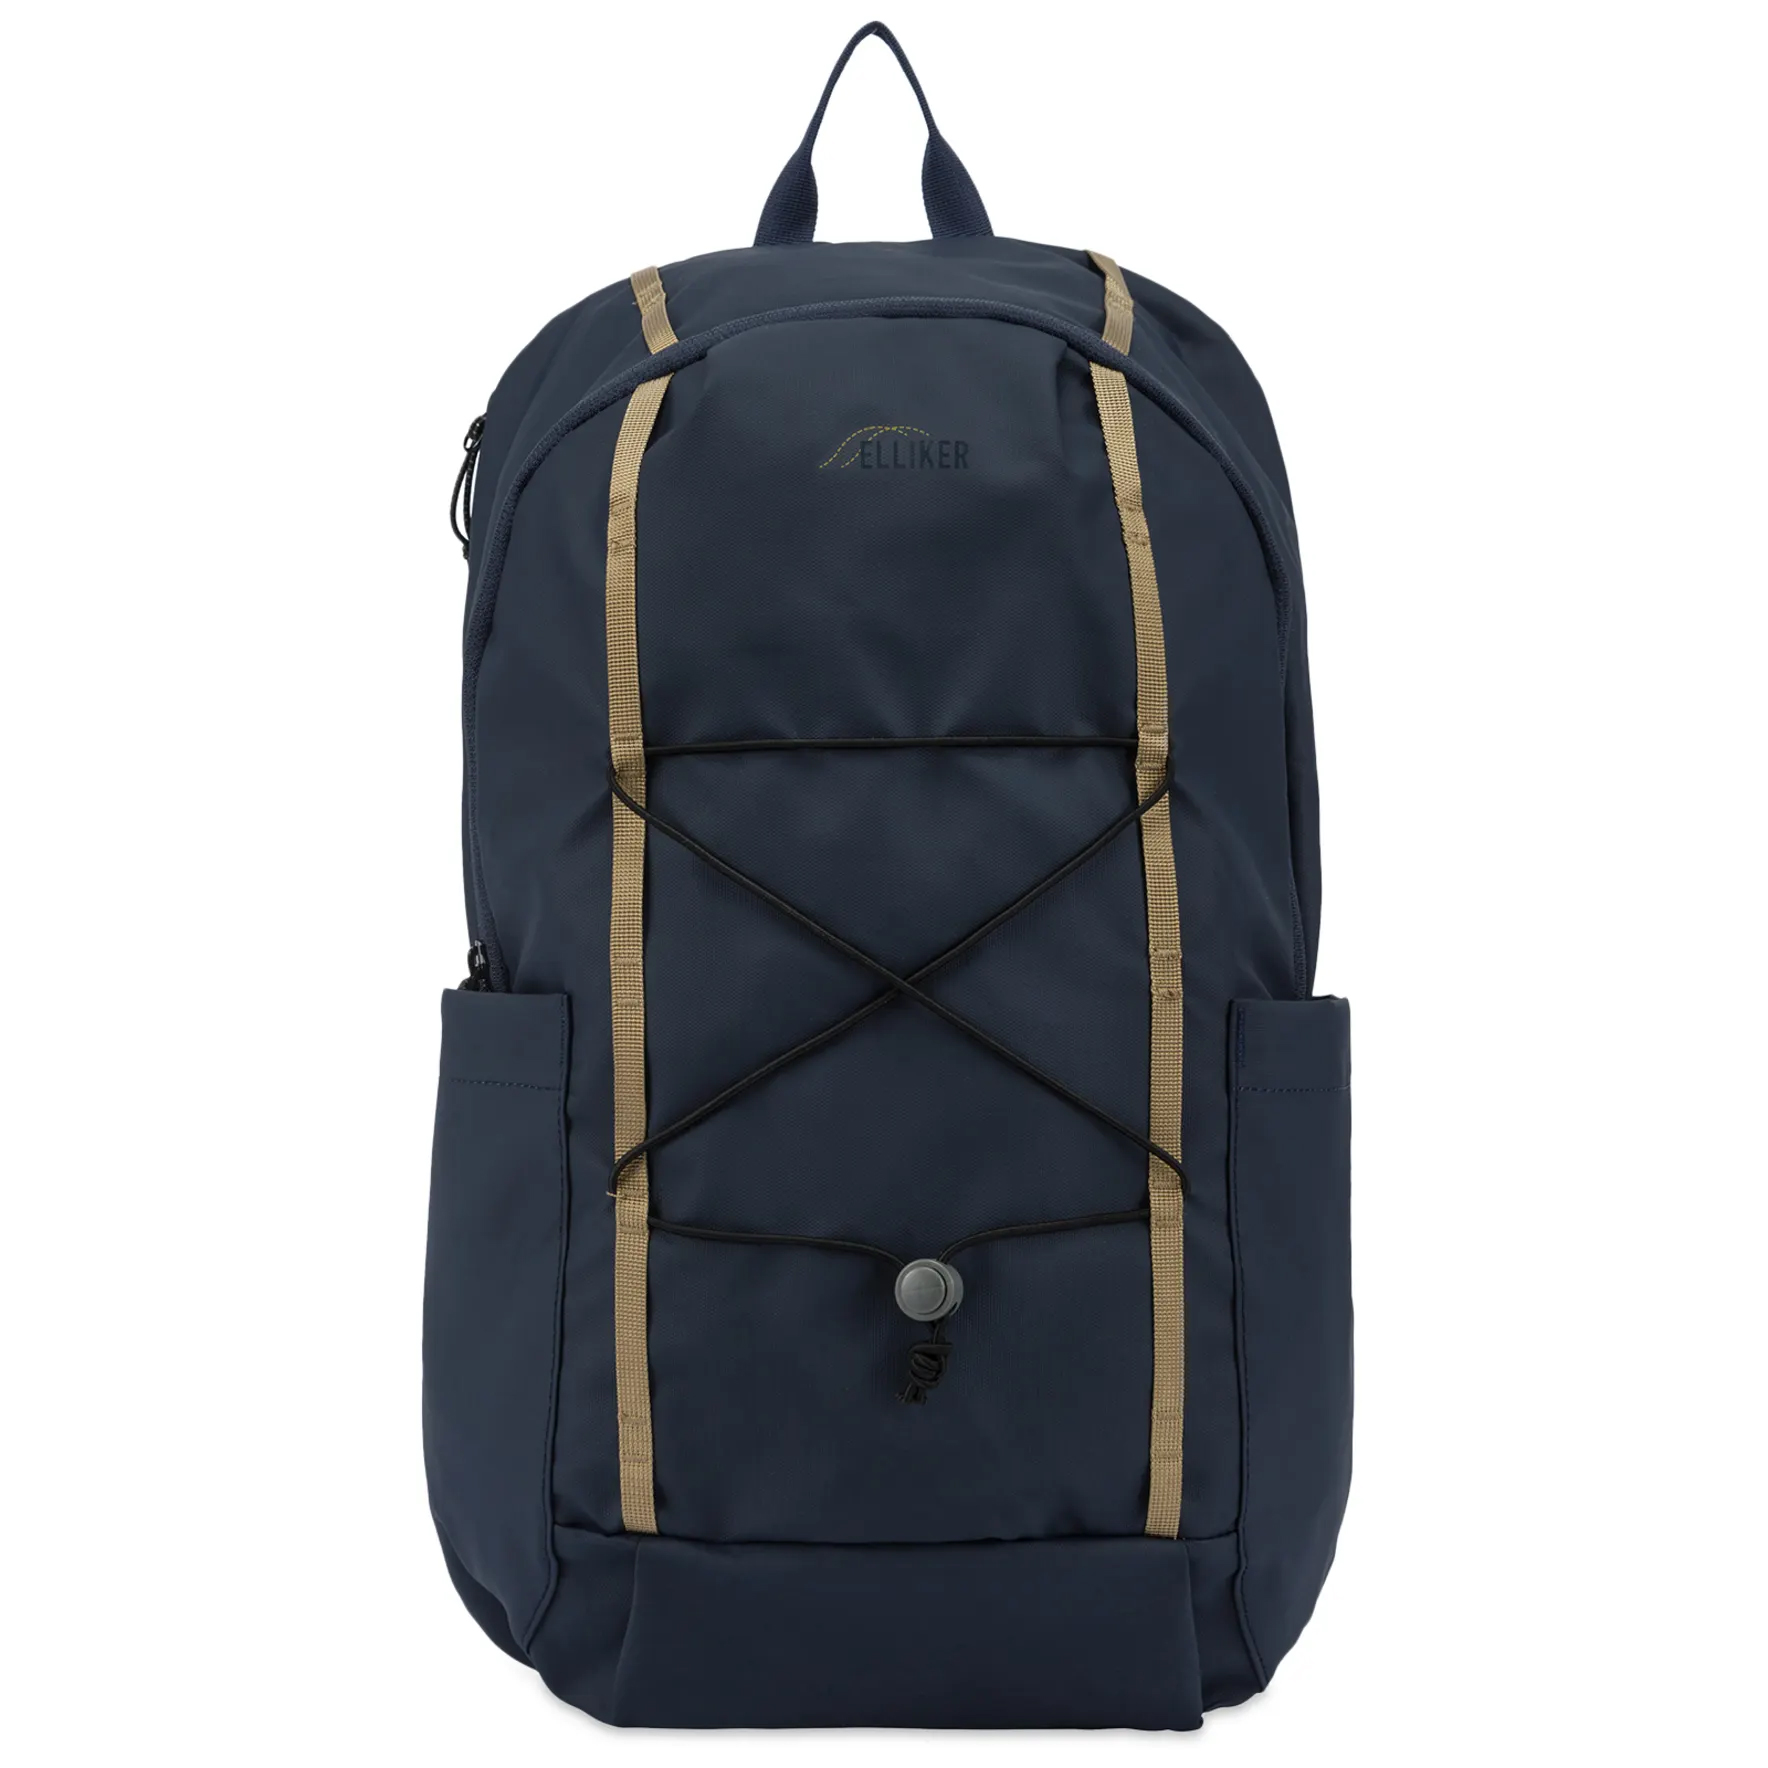 Рюкзак Elliker Keswick Zip-Top Backpack, темно-синий рюкзак elliker dayle black